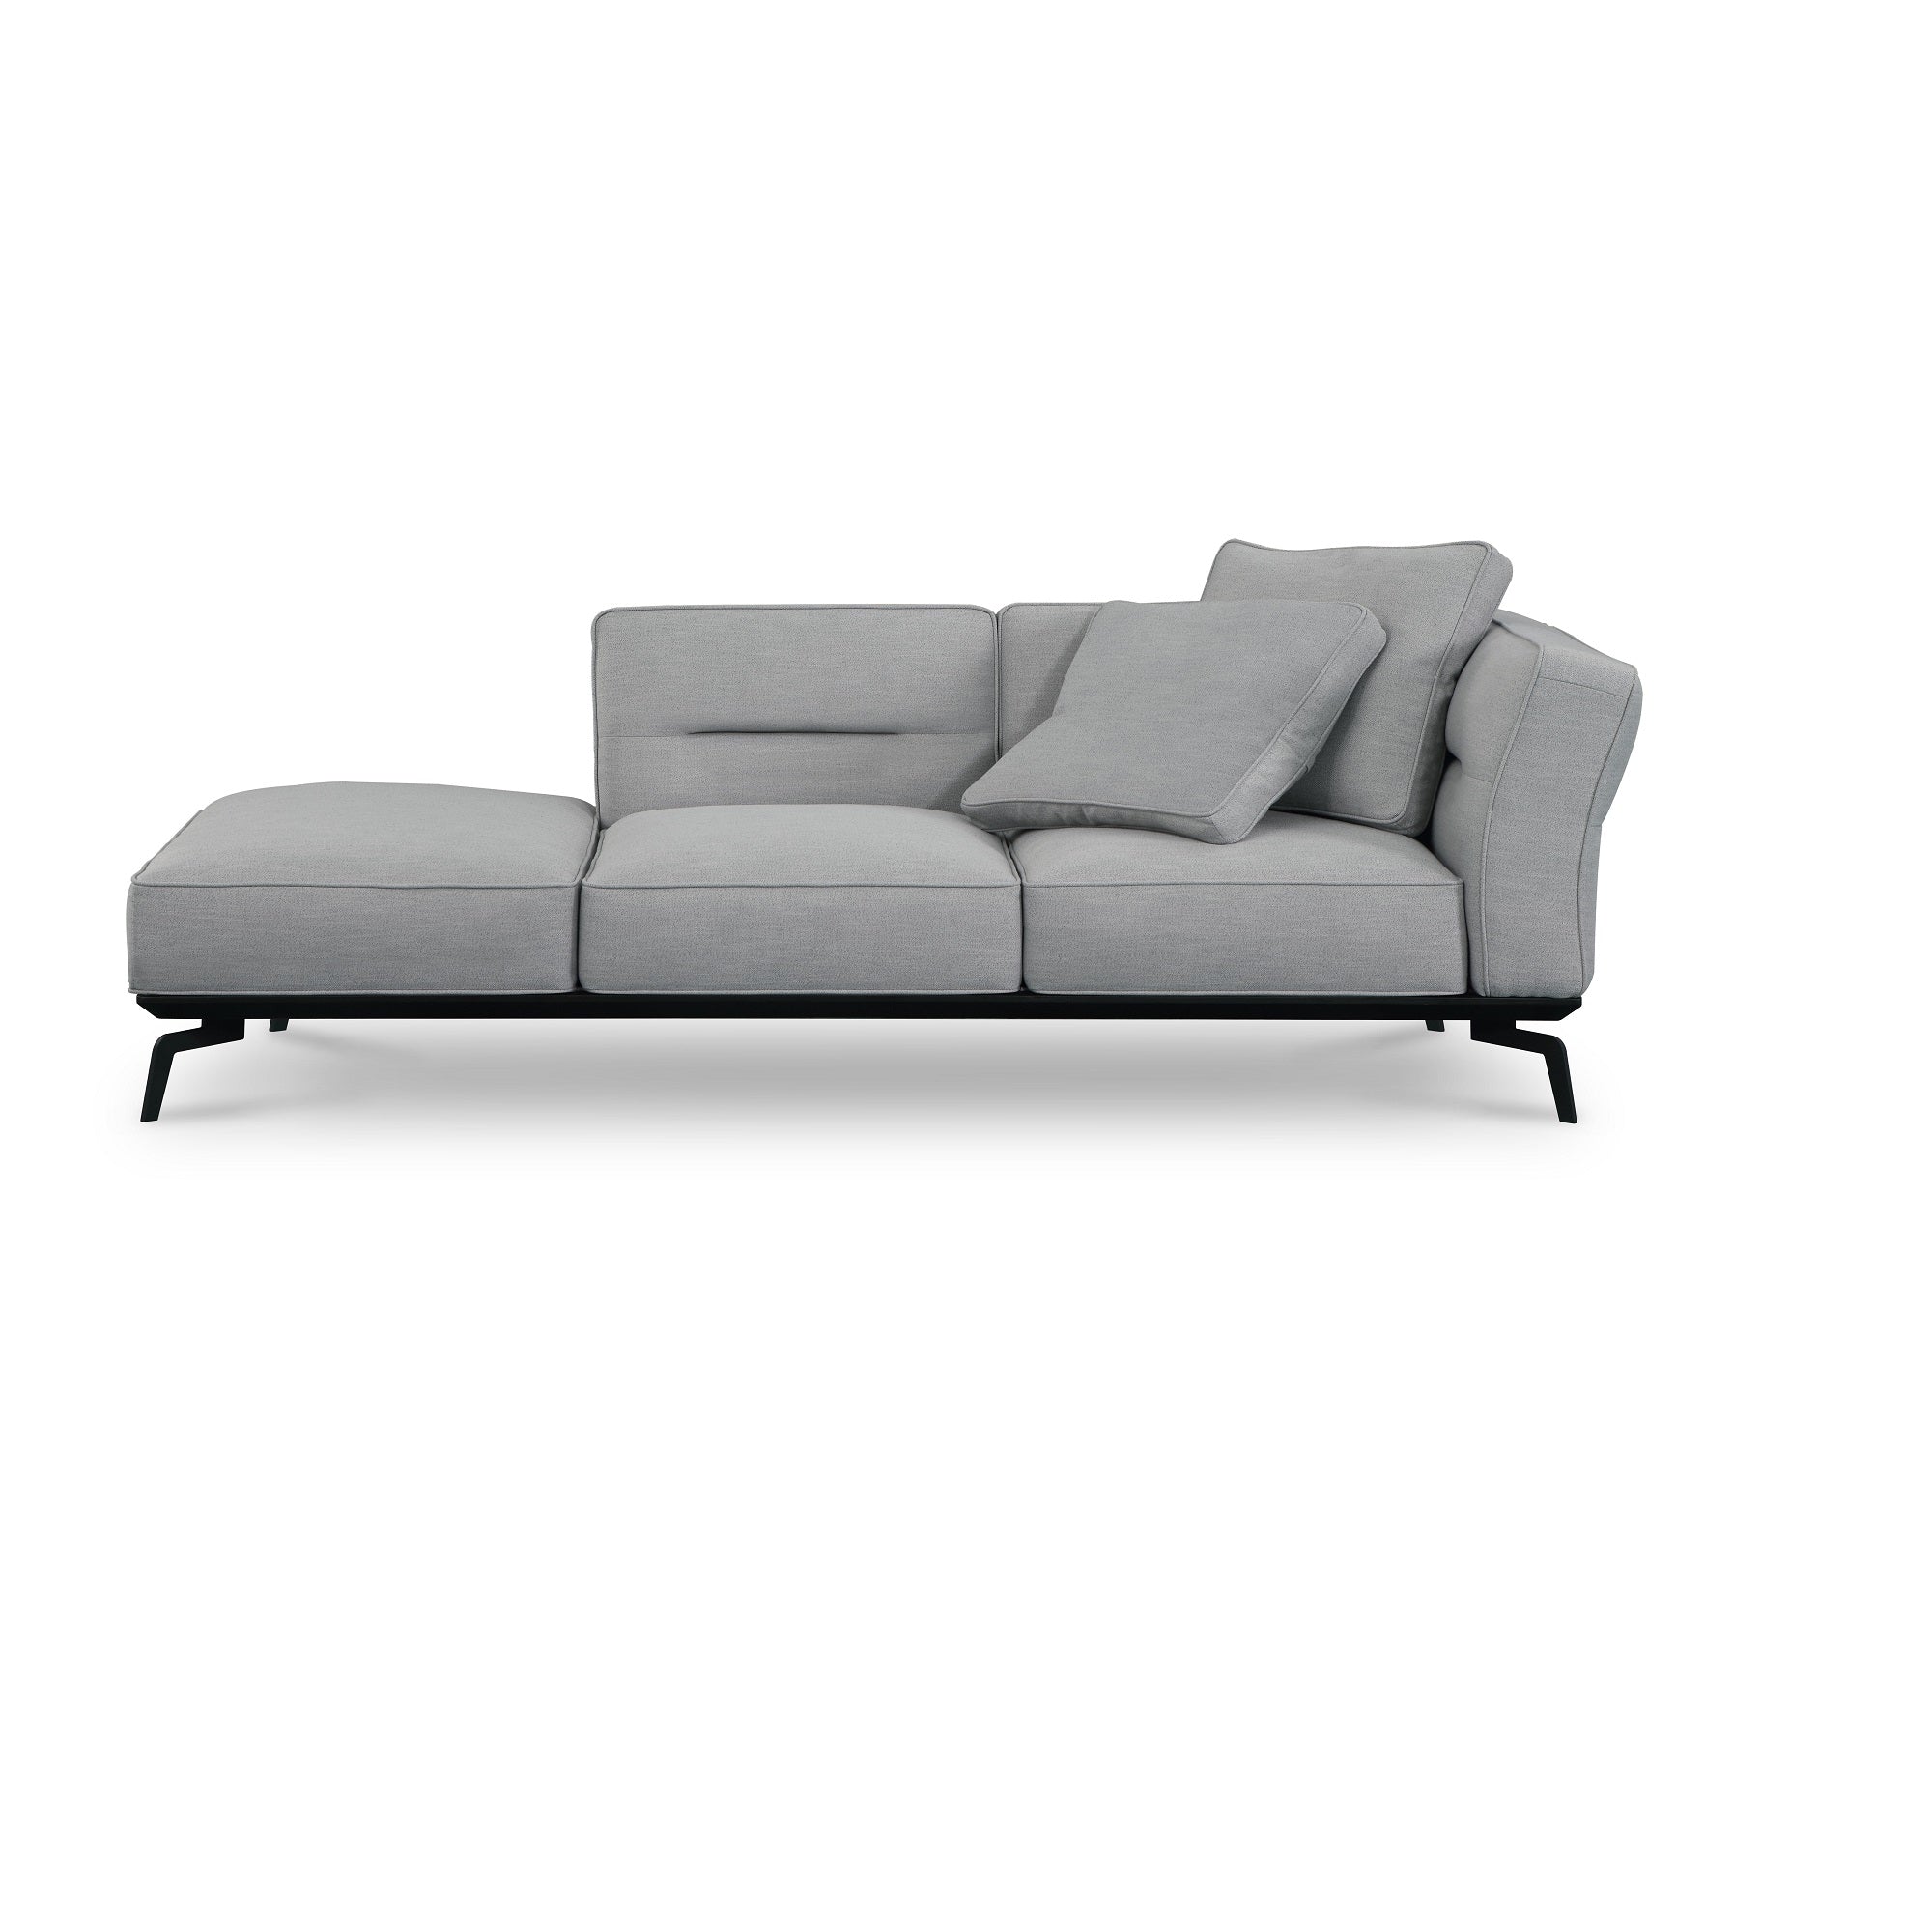 Merino Chaise Lounge - Furniture.Agency